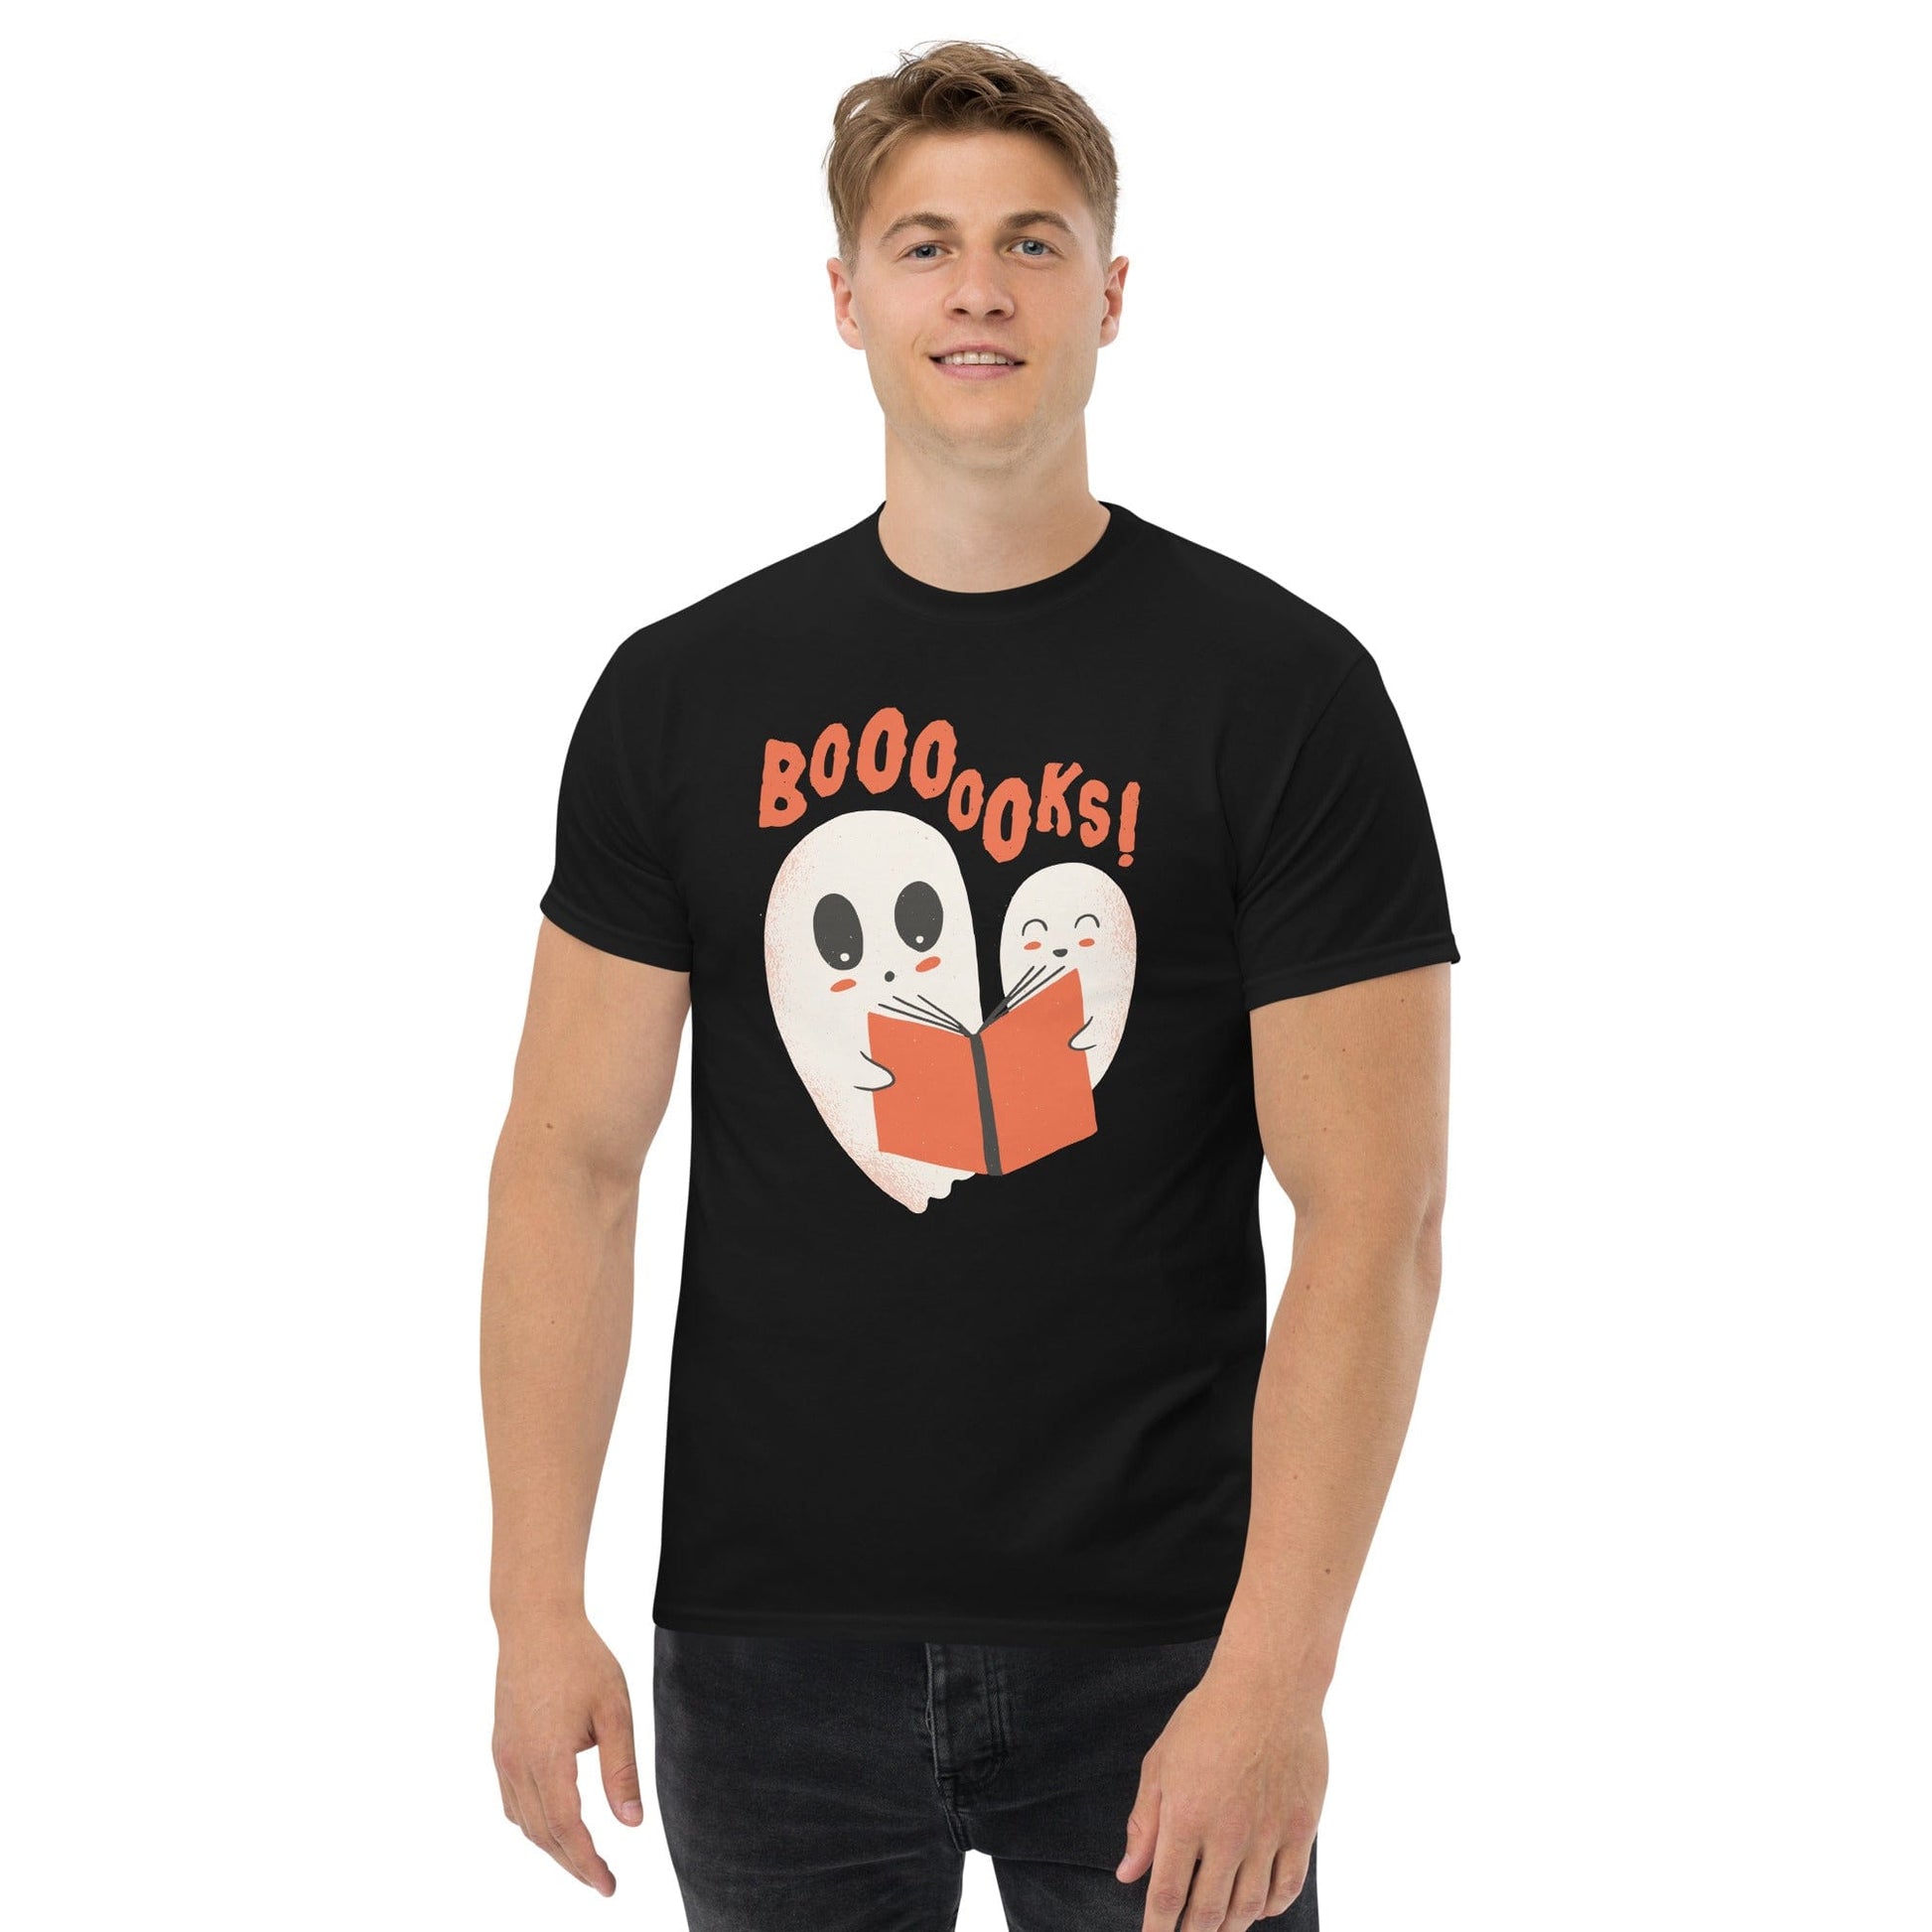 Ghosts with Boooooks - Plus-Sized T-Shirt